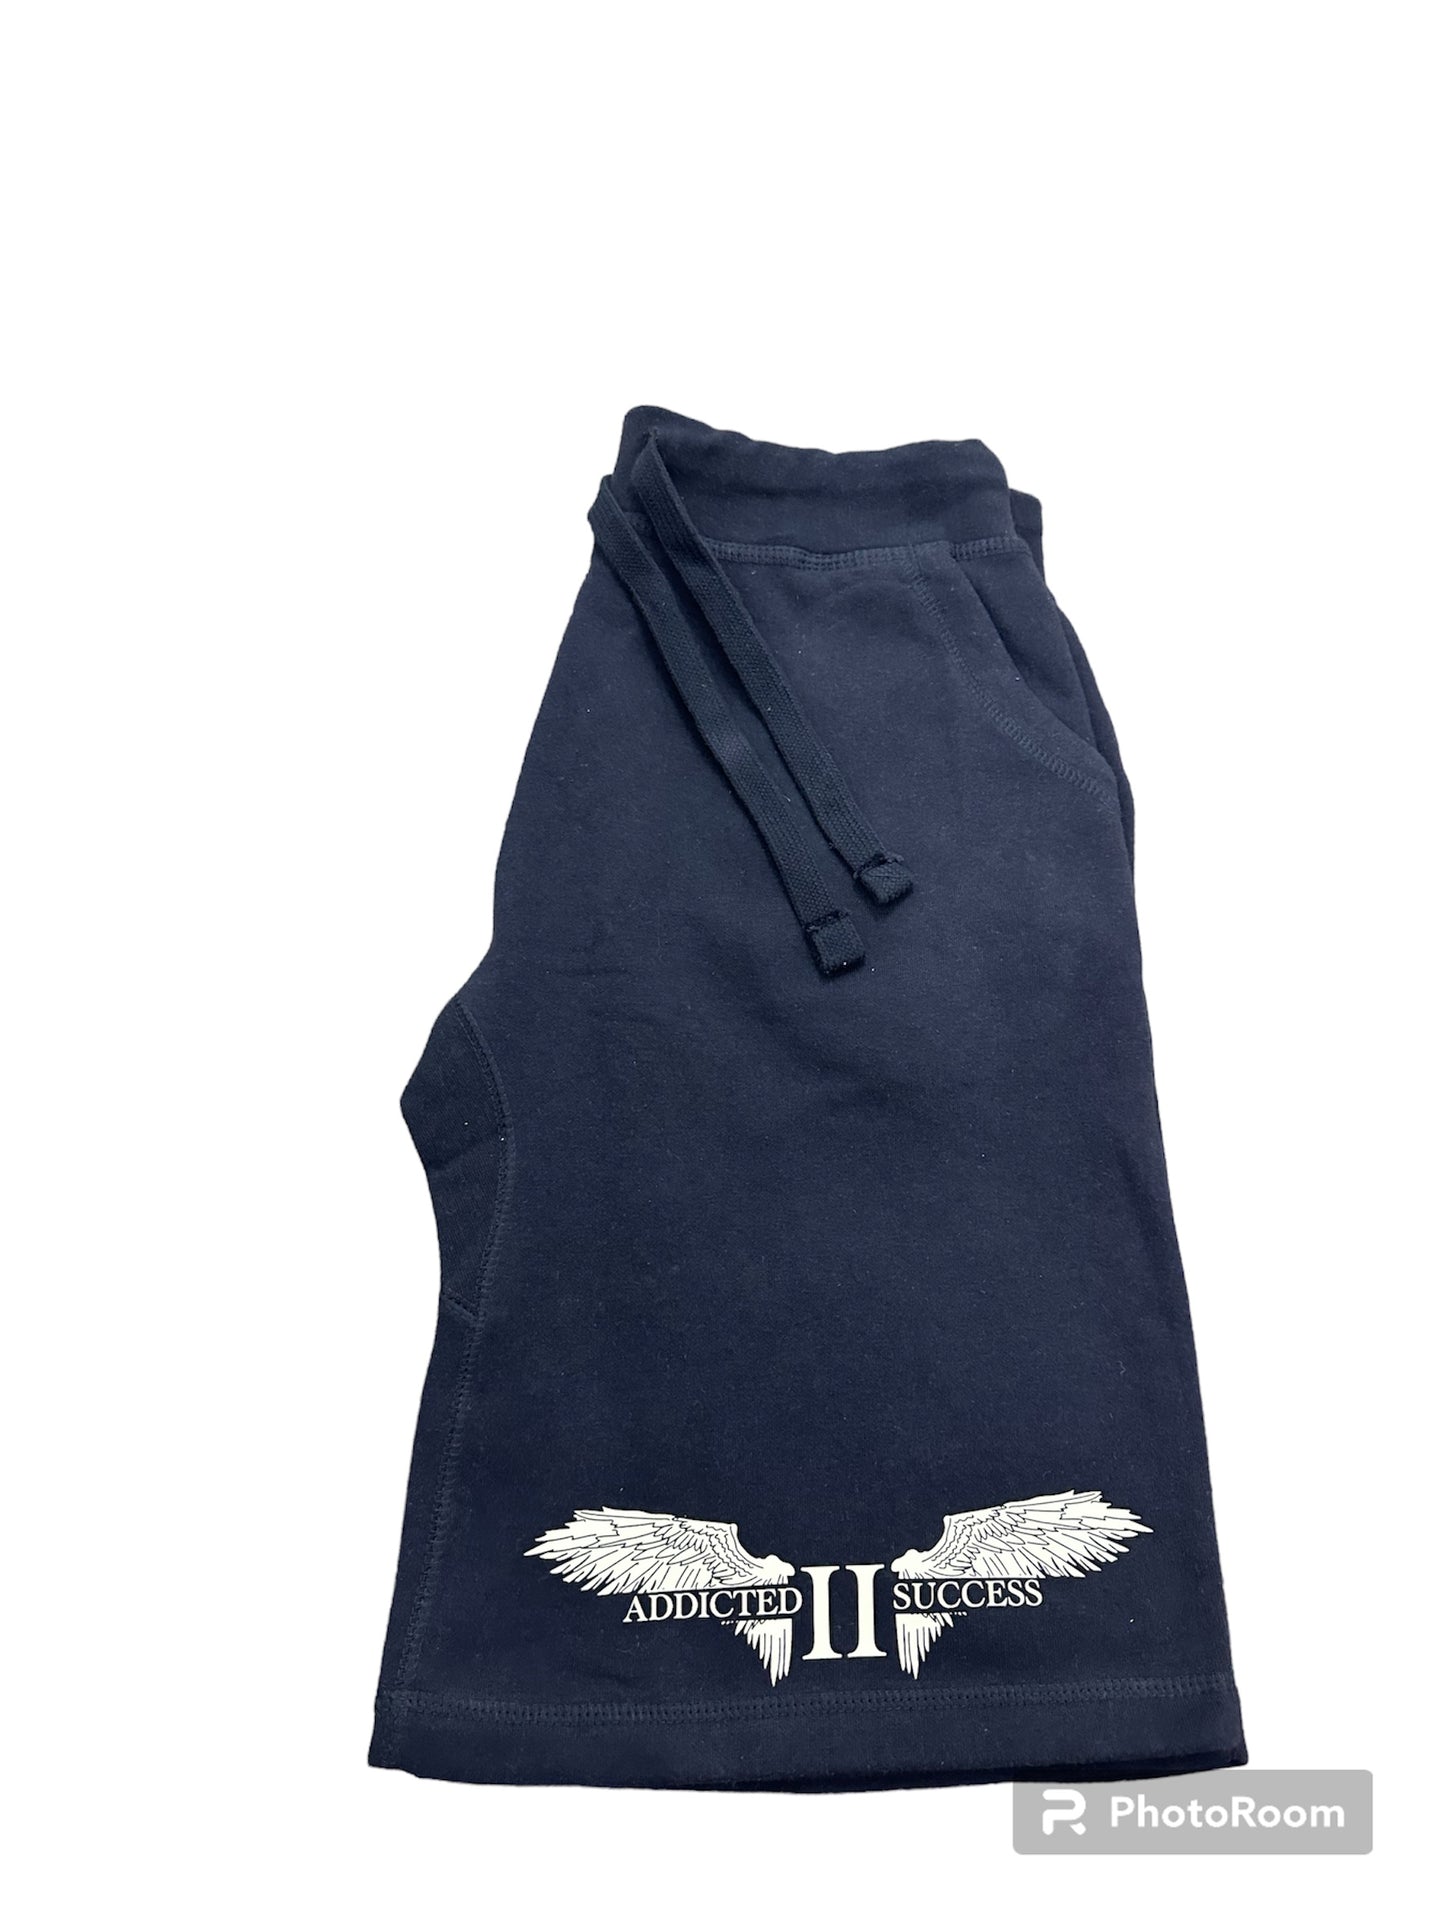 Classic - Mens Navy Blue Cotton Fleece Shorts